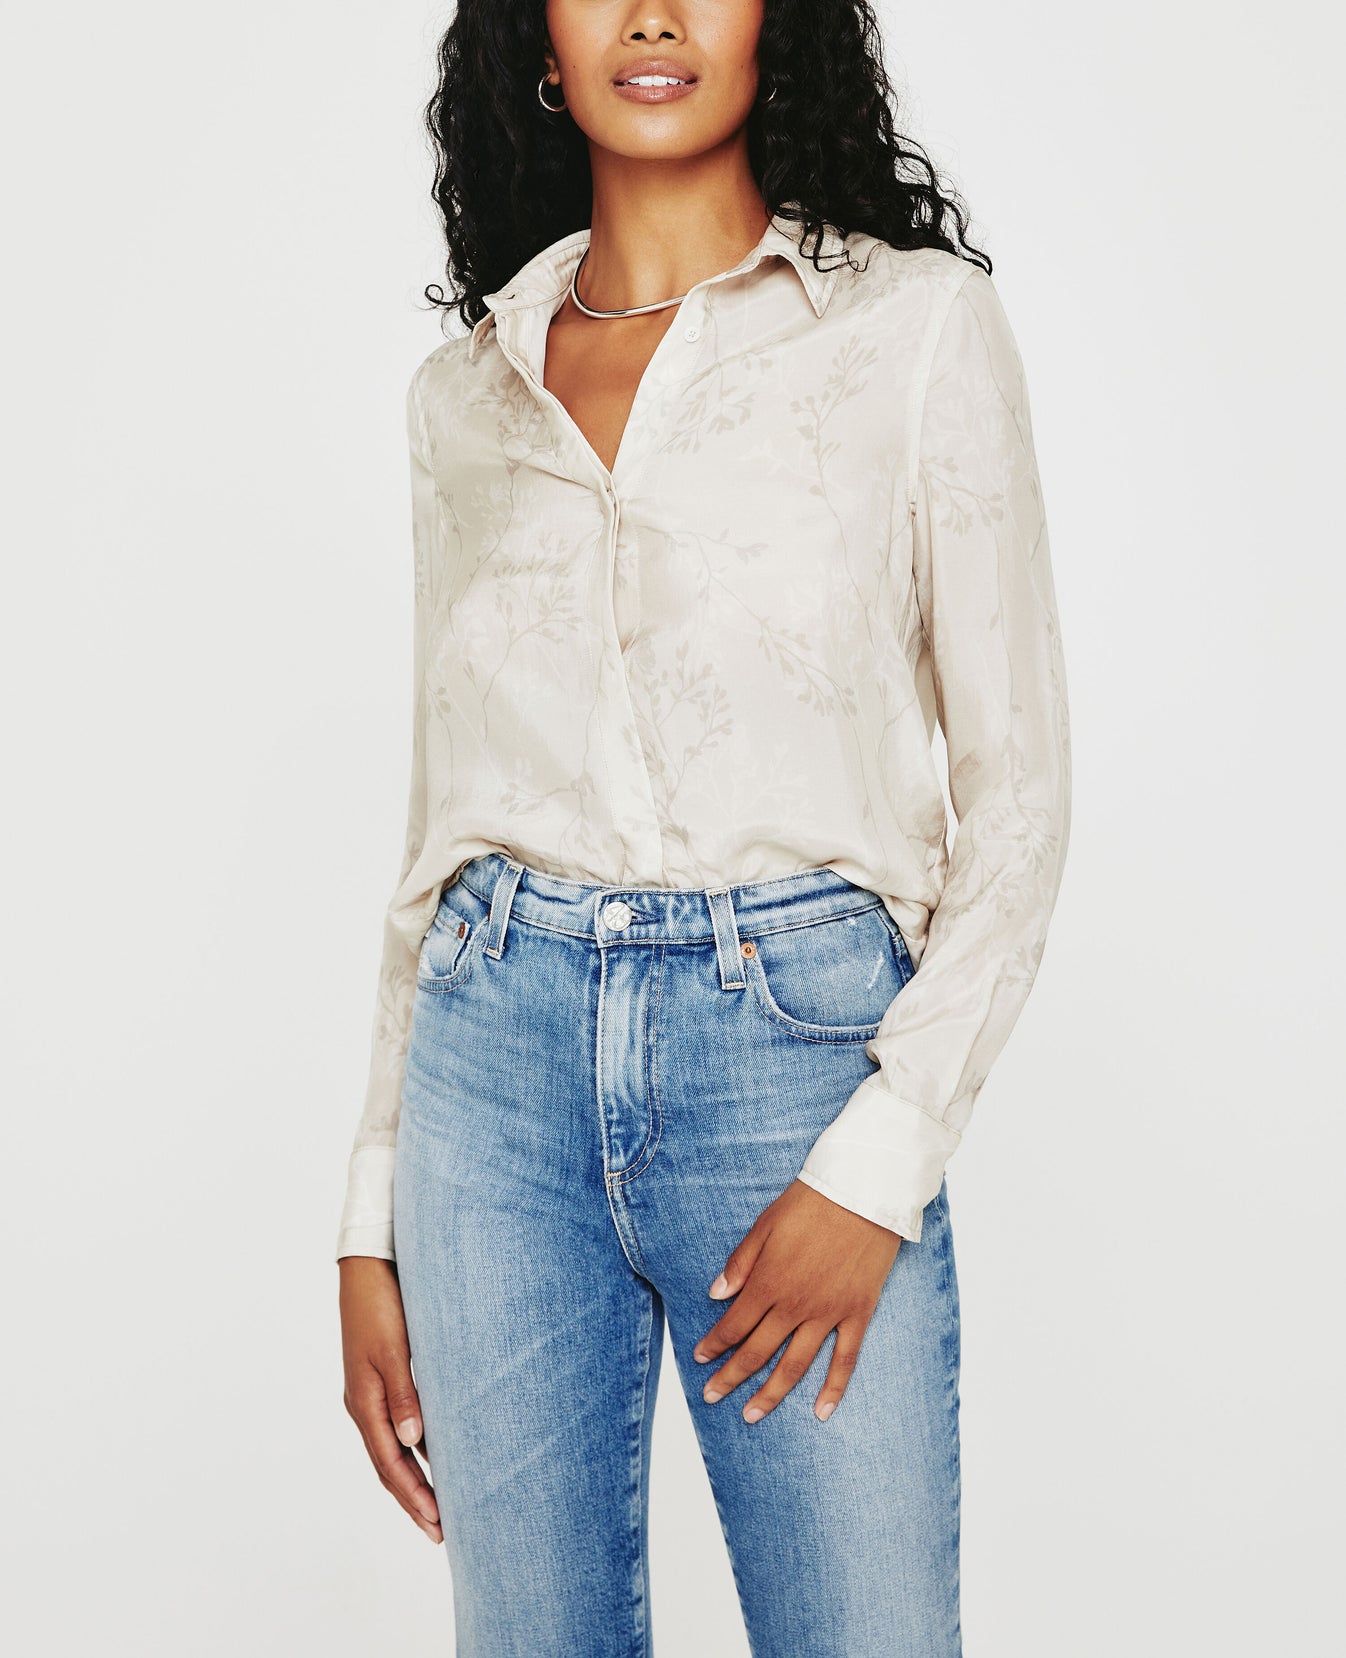 Shiela SHADOW FLOWER NEUTRAL MUTI Classic Button Up Shirt Women Tops Photo 1